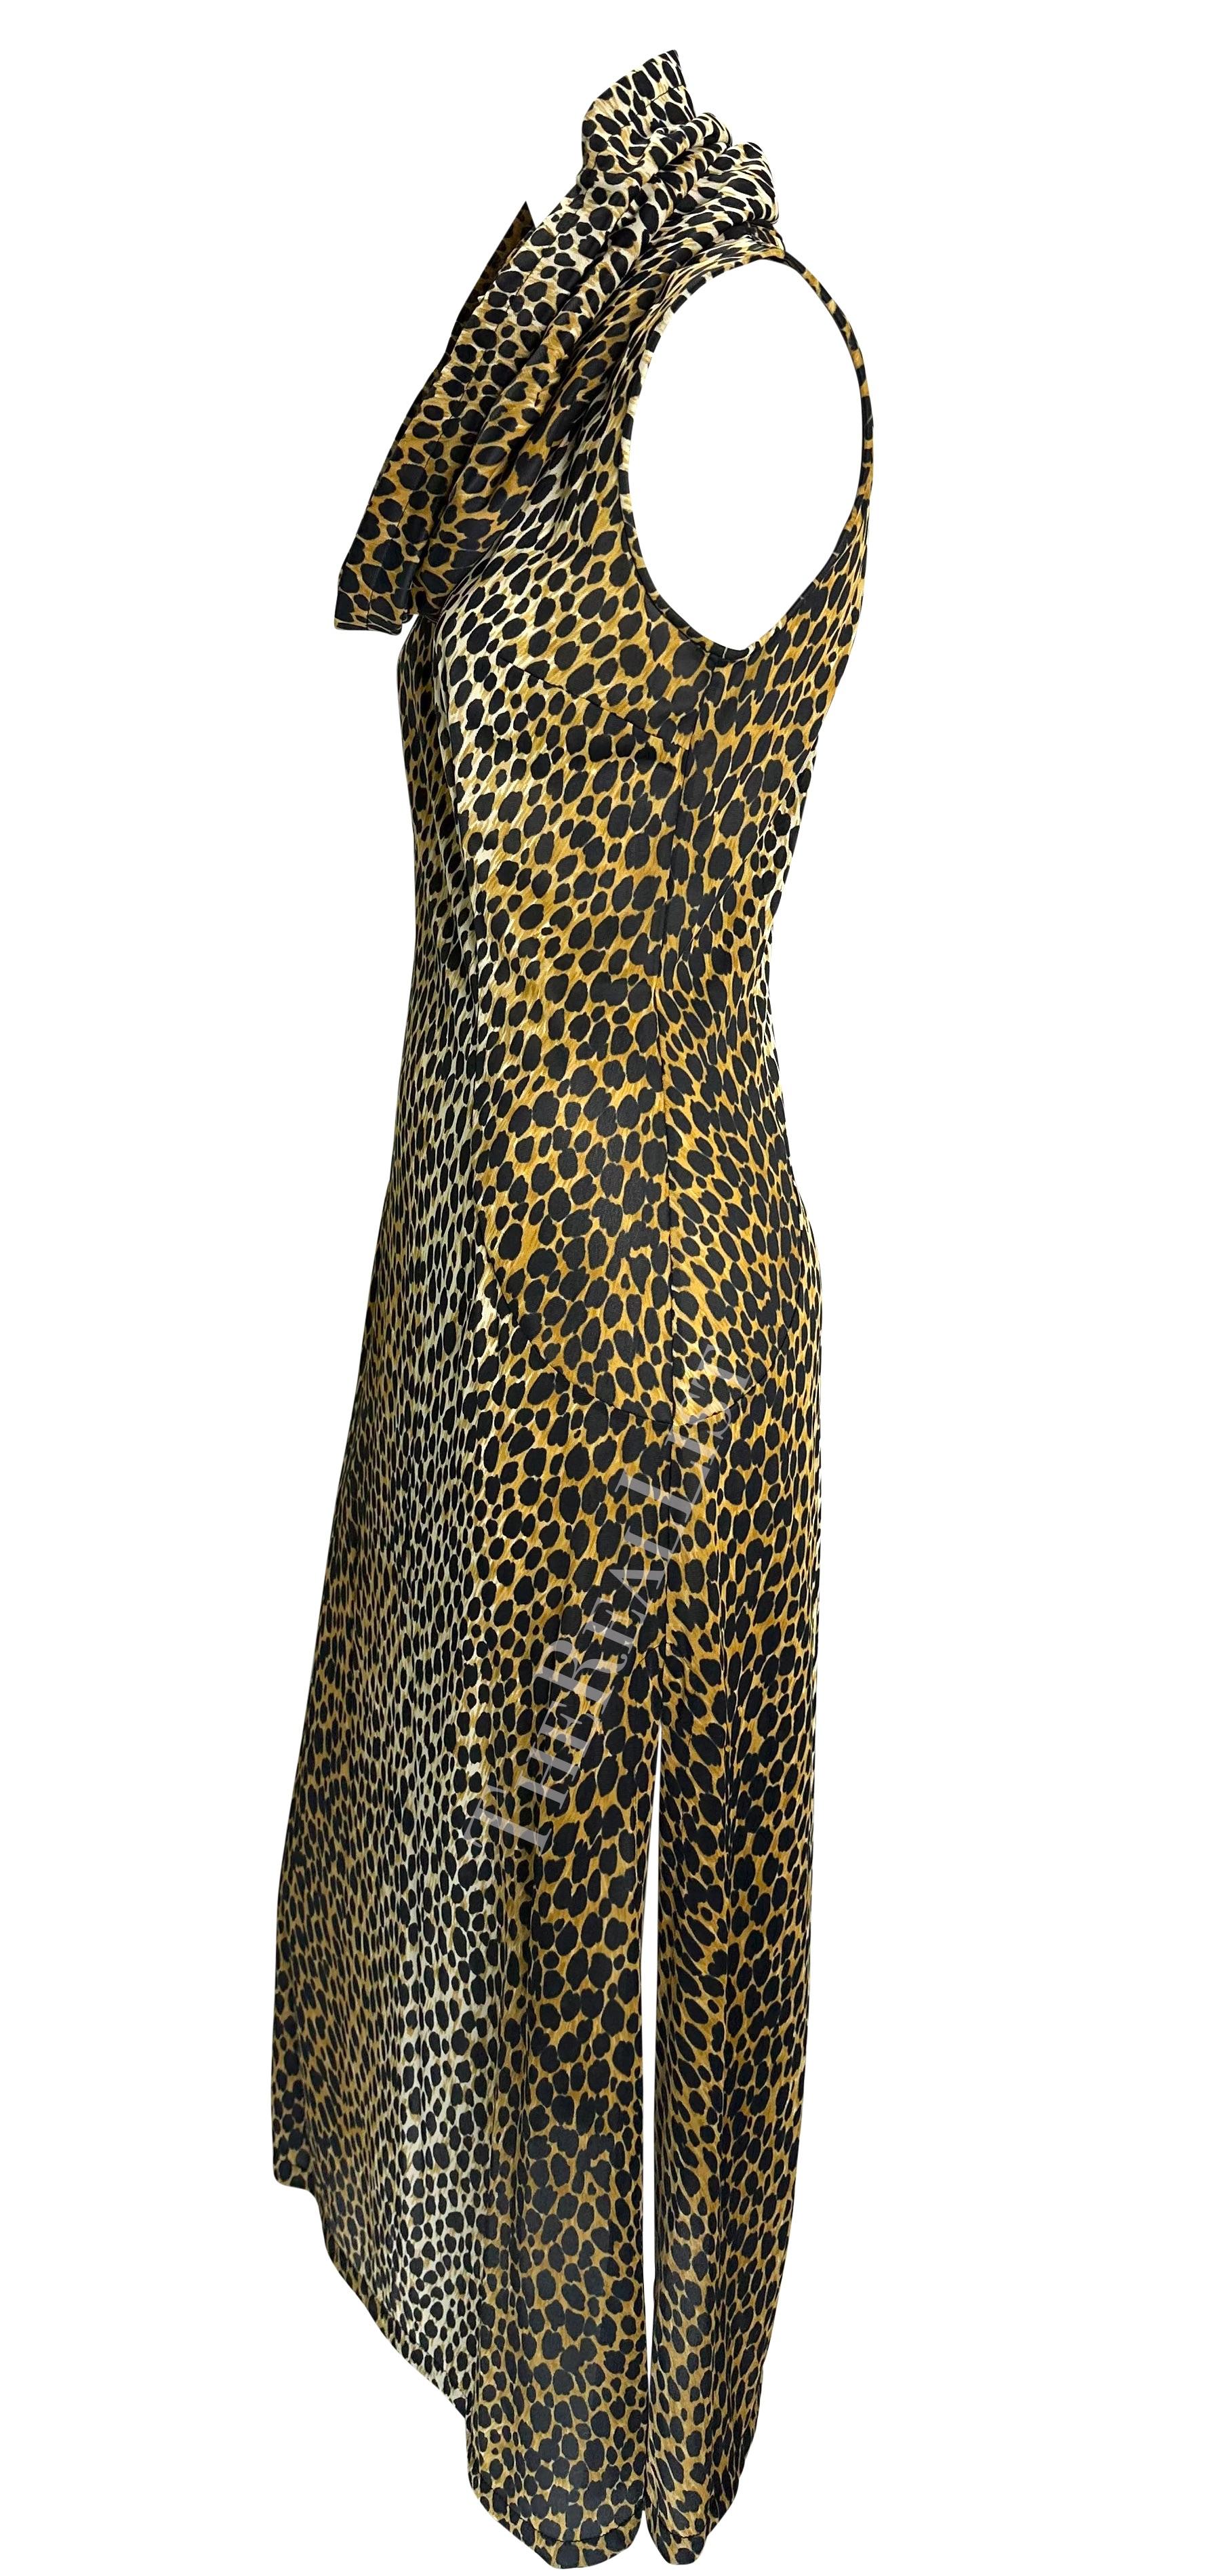 S/S 1996 Dolce & Gabbana Hooded Stretch Leopard Print Hit Slit Dress For Sale 8